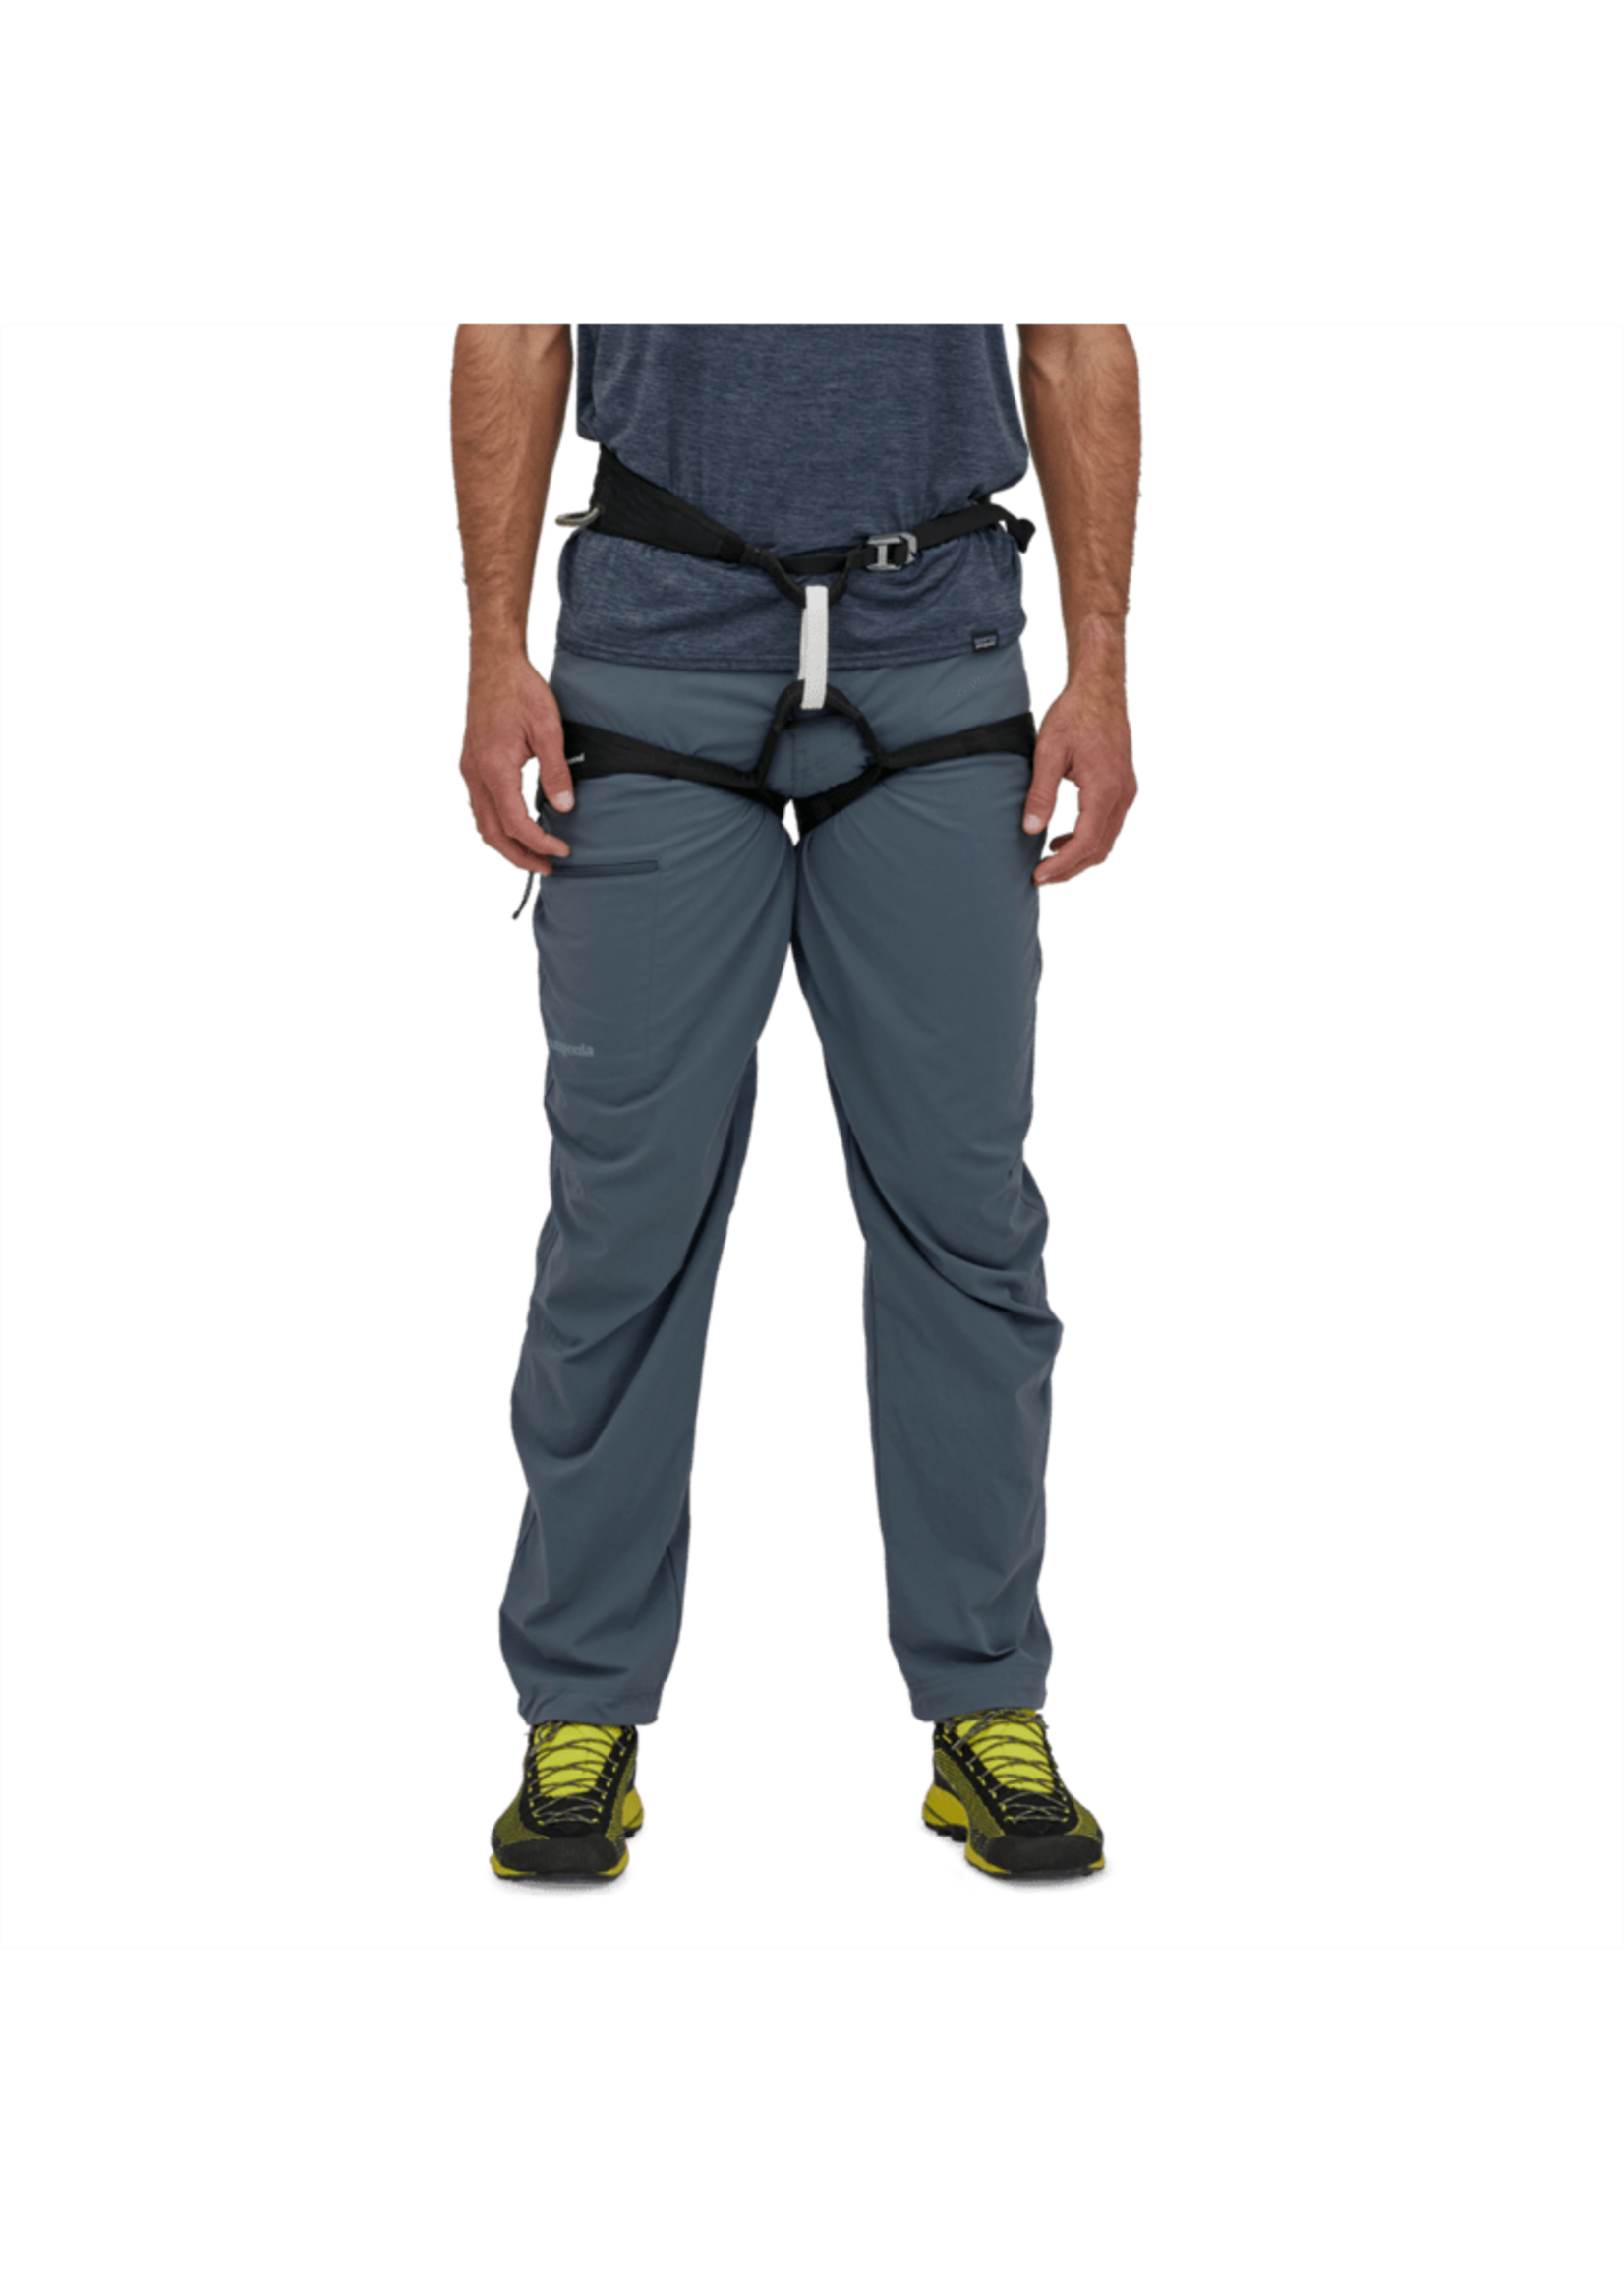 Patagonia Men's RPS Rock Pants - Short - Plume Grey